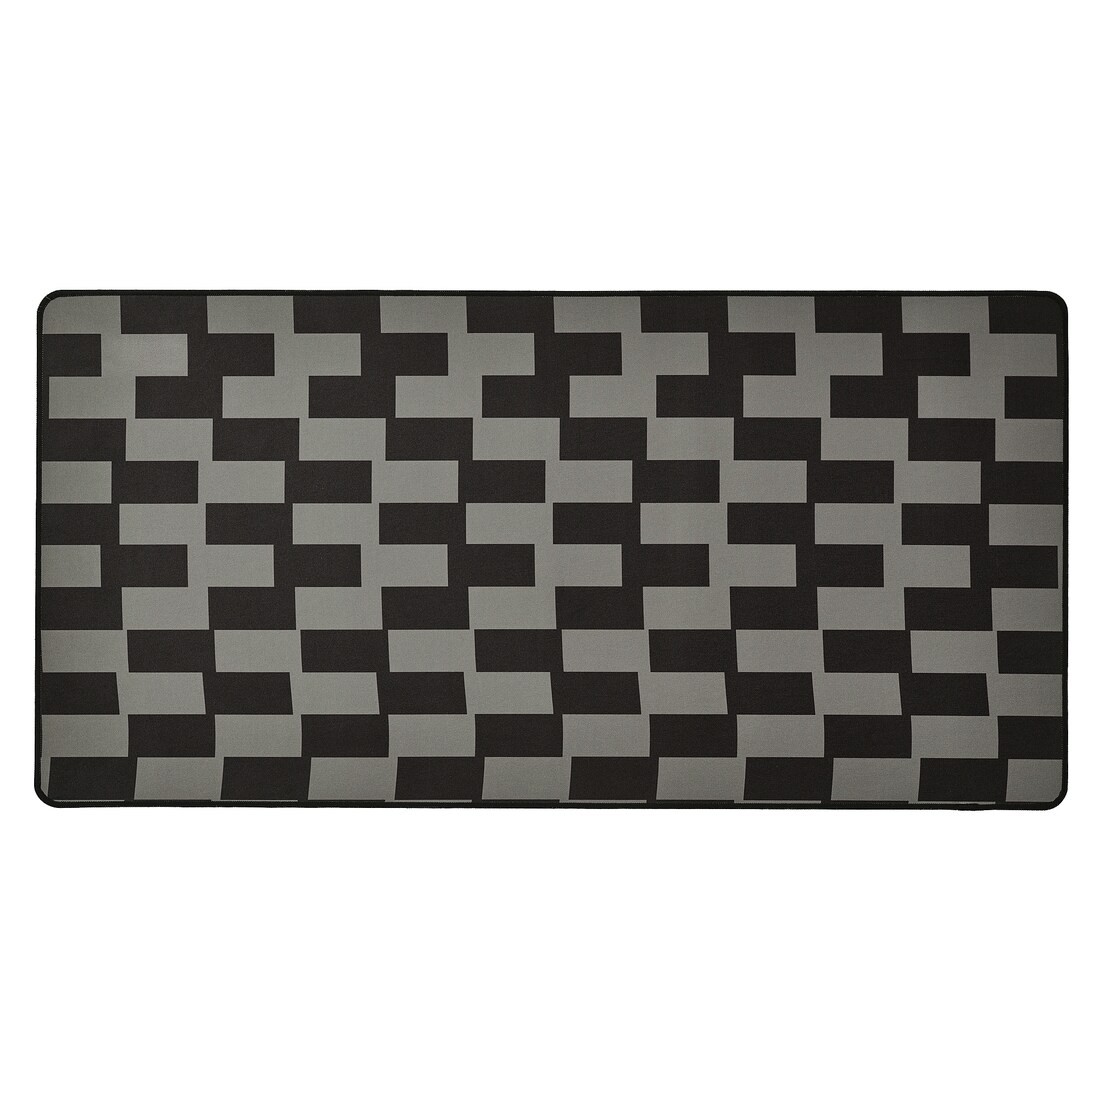 BLÅSKATA Ігровий килимок для миші, чорний / сірий візерунок, 40x80 см